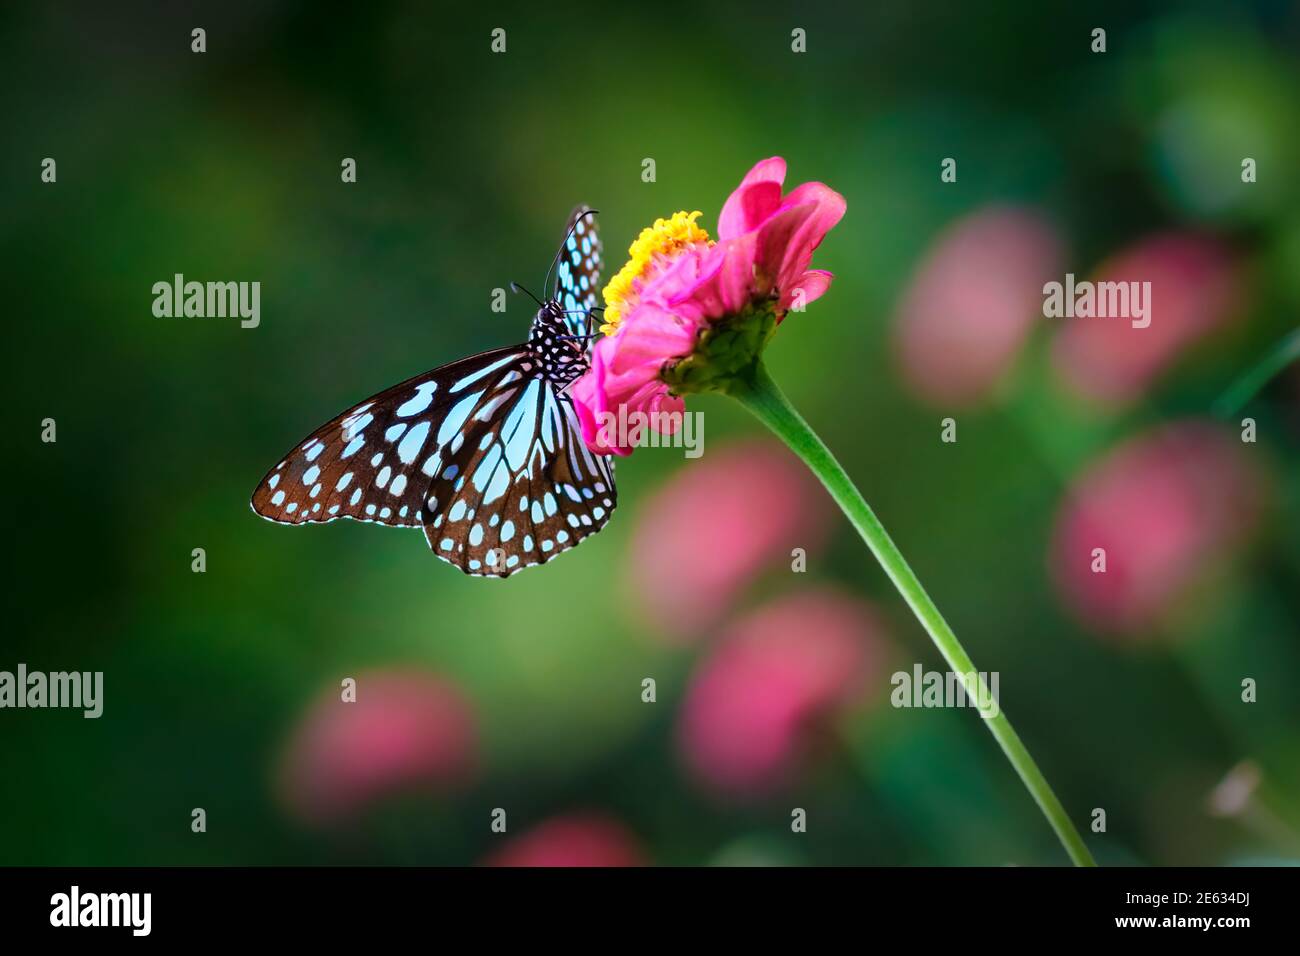 Mariposa de tigre azul en una flor de zinnia rosa con oscuro fondo rosa verde Foto de stock